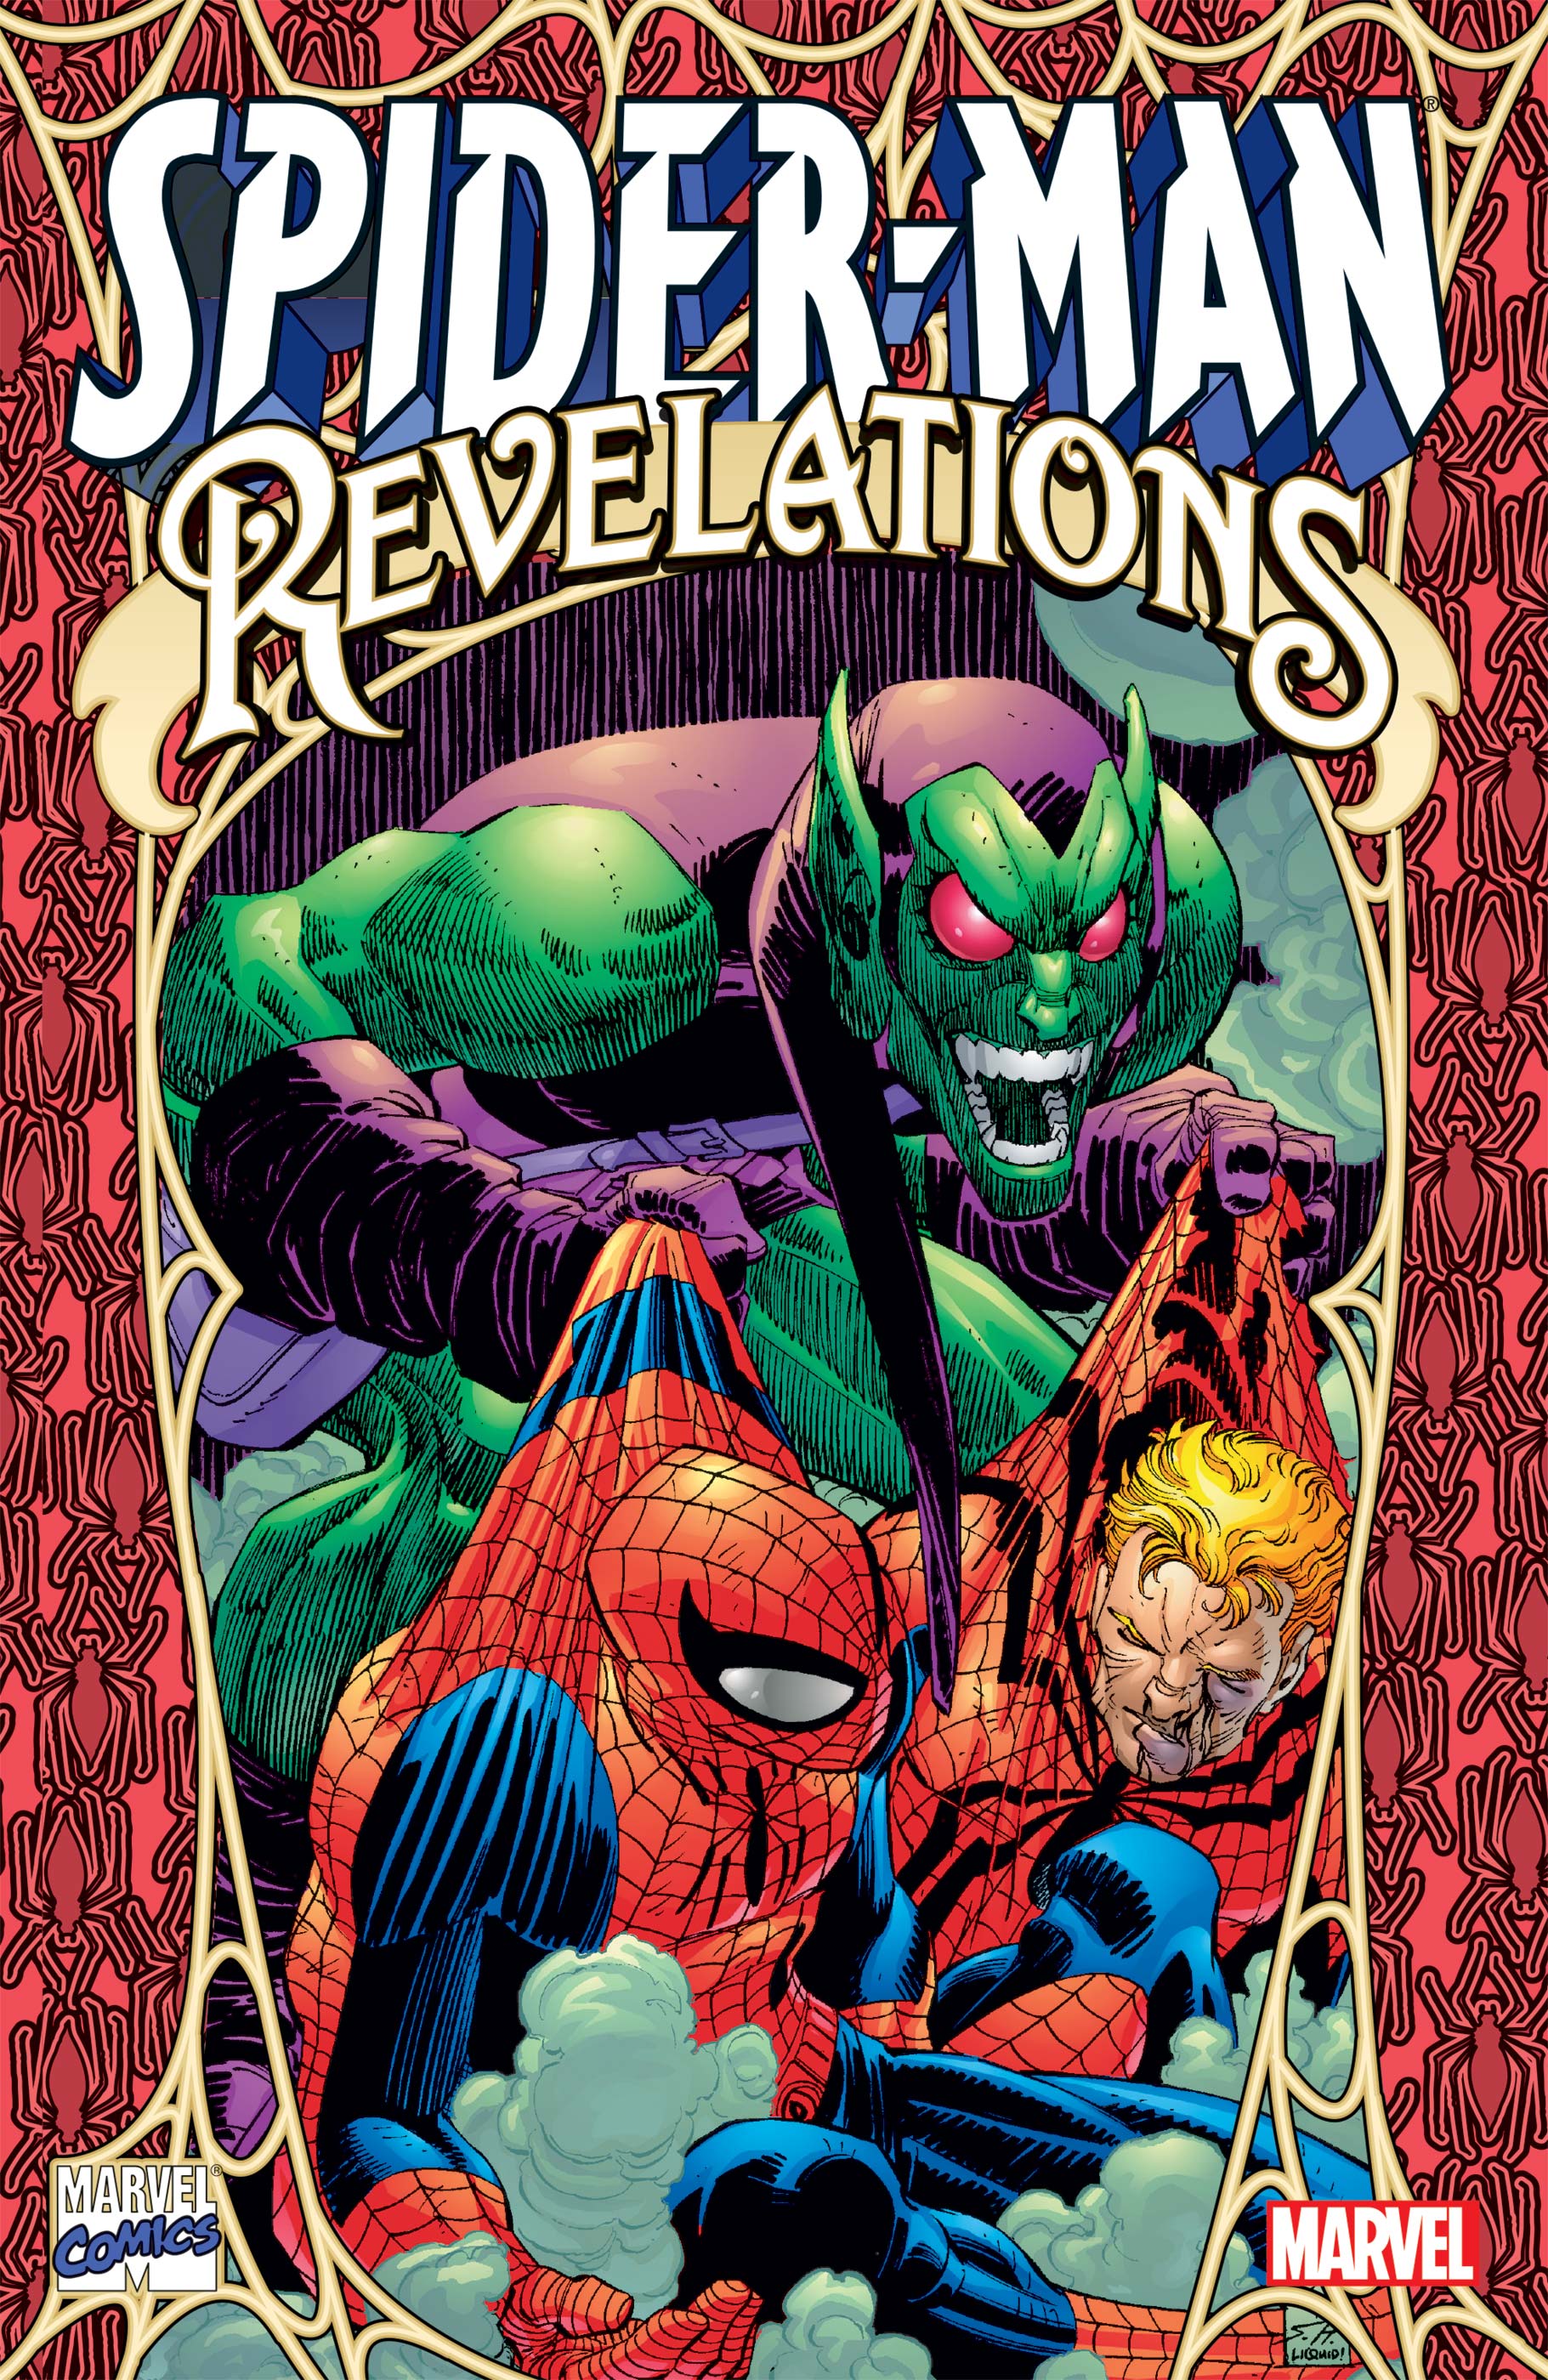 Spider-Man: Revelations (Trade Paperback)